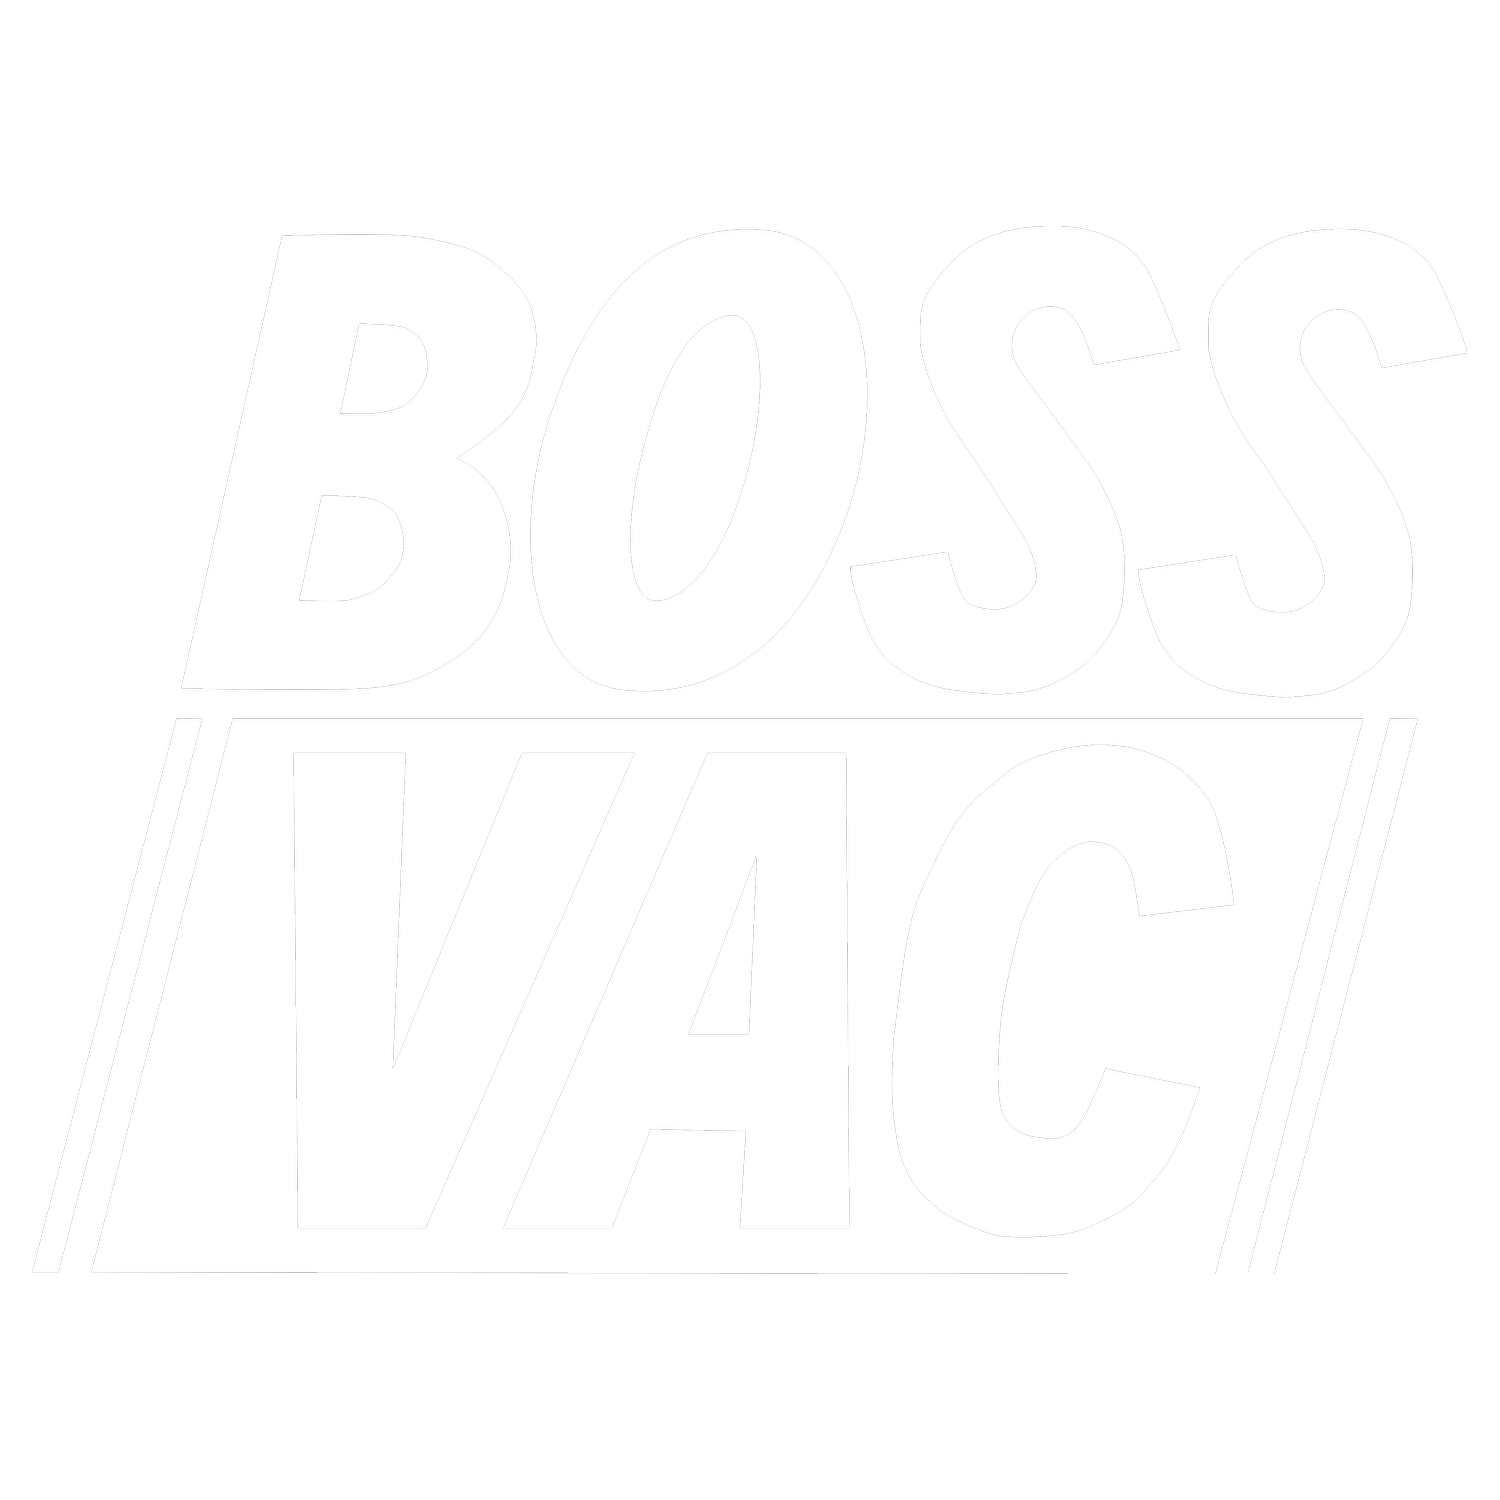 BOSSVAC - Hot-Rod Hydro-Vac Trailers. Made in Oklahoma